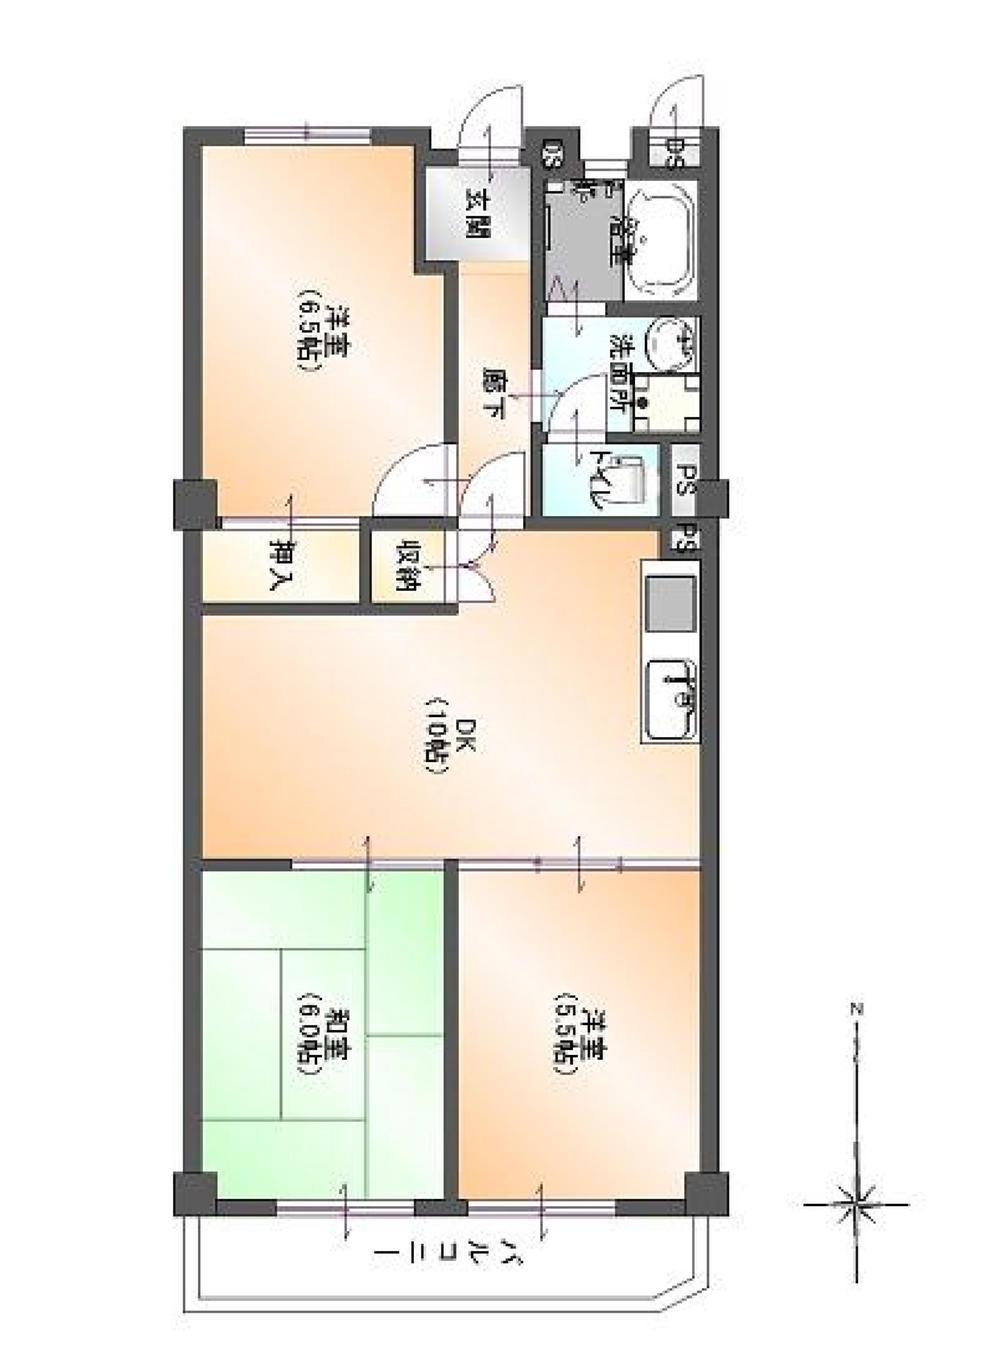 Floor plan. 3DK, Price 8.9 million yen, Footprint 61.6 sq m , Balcony area 5.3 sq m